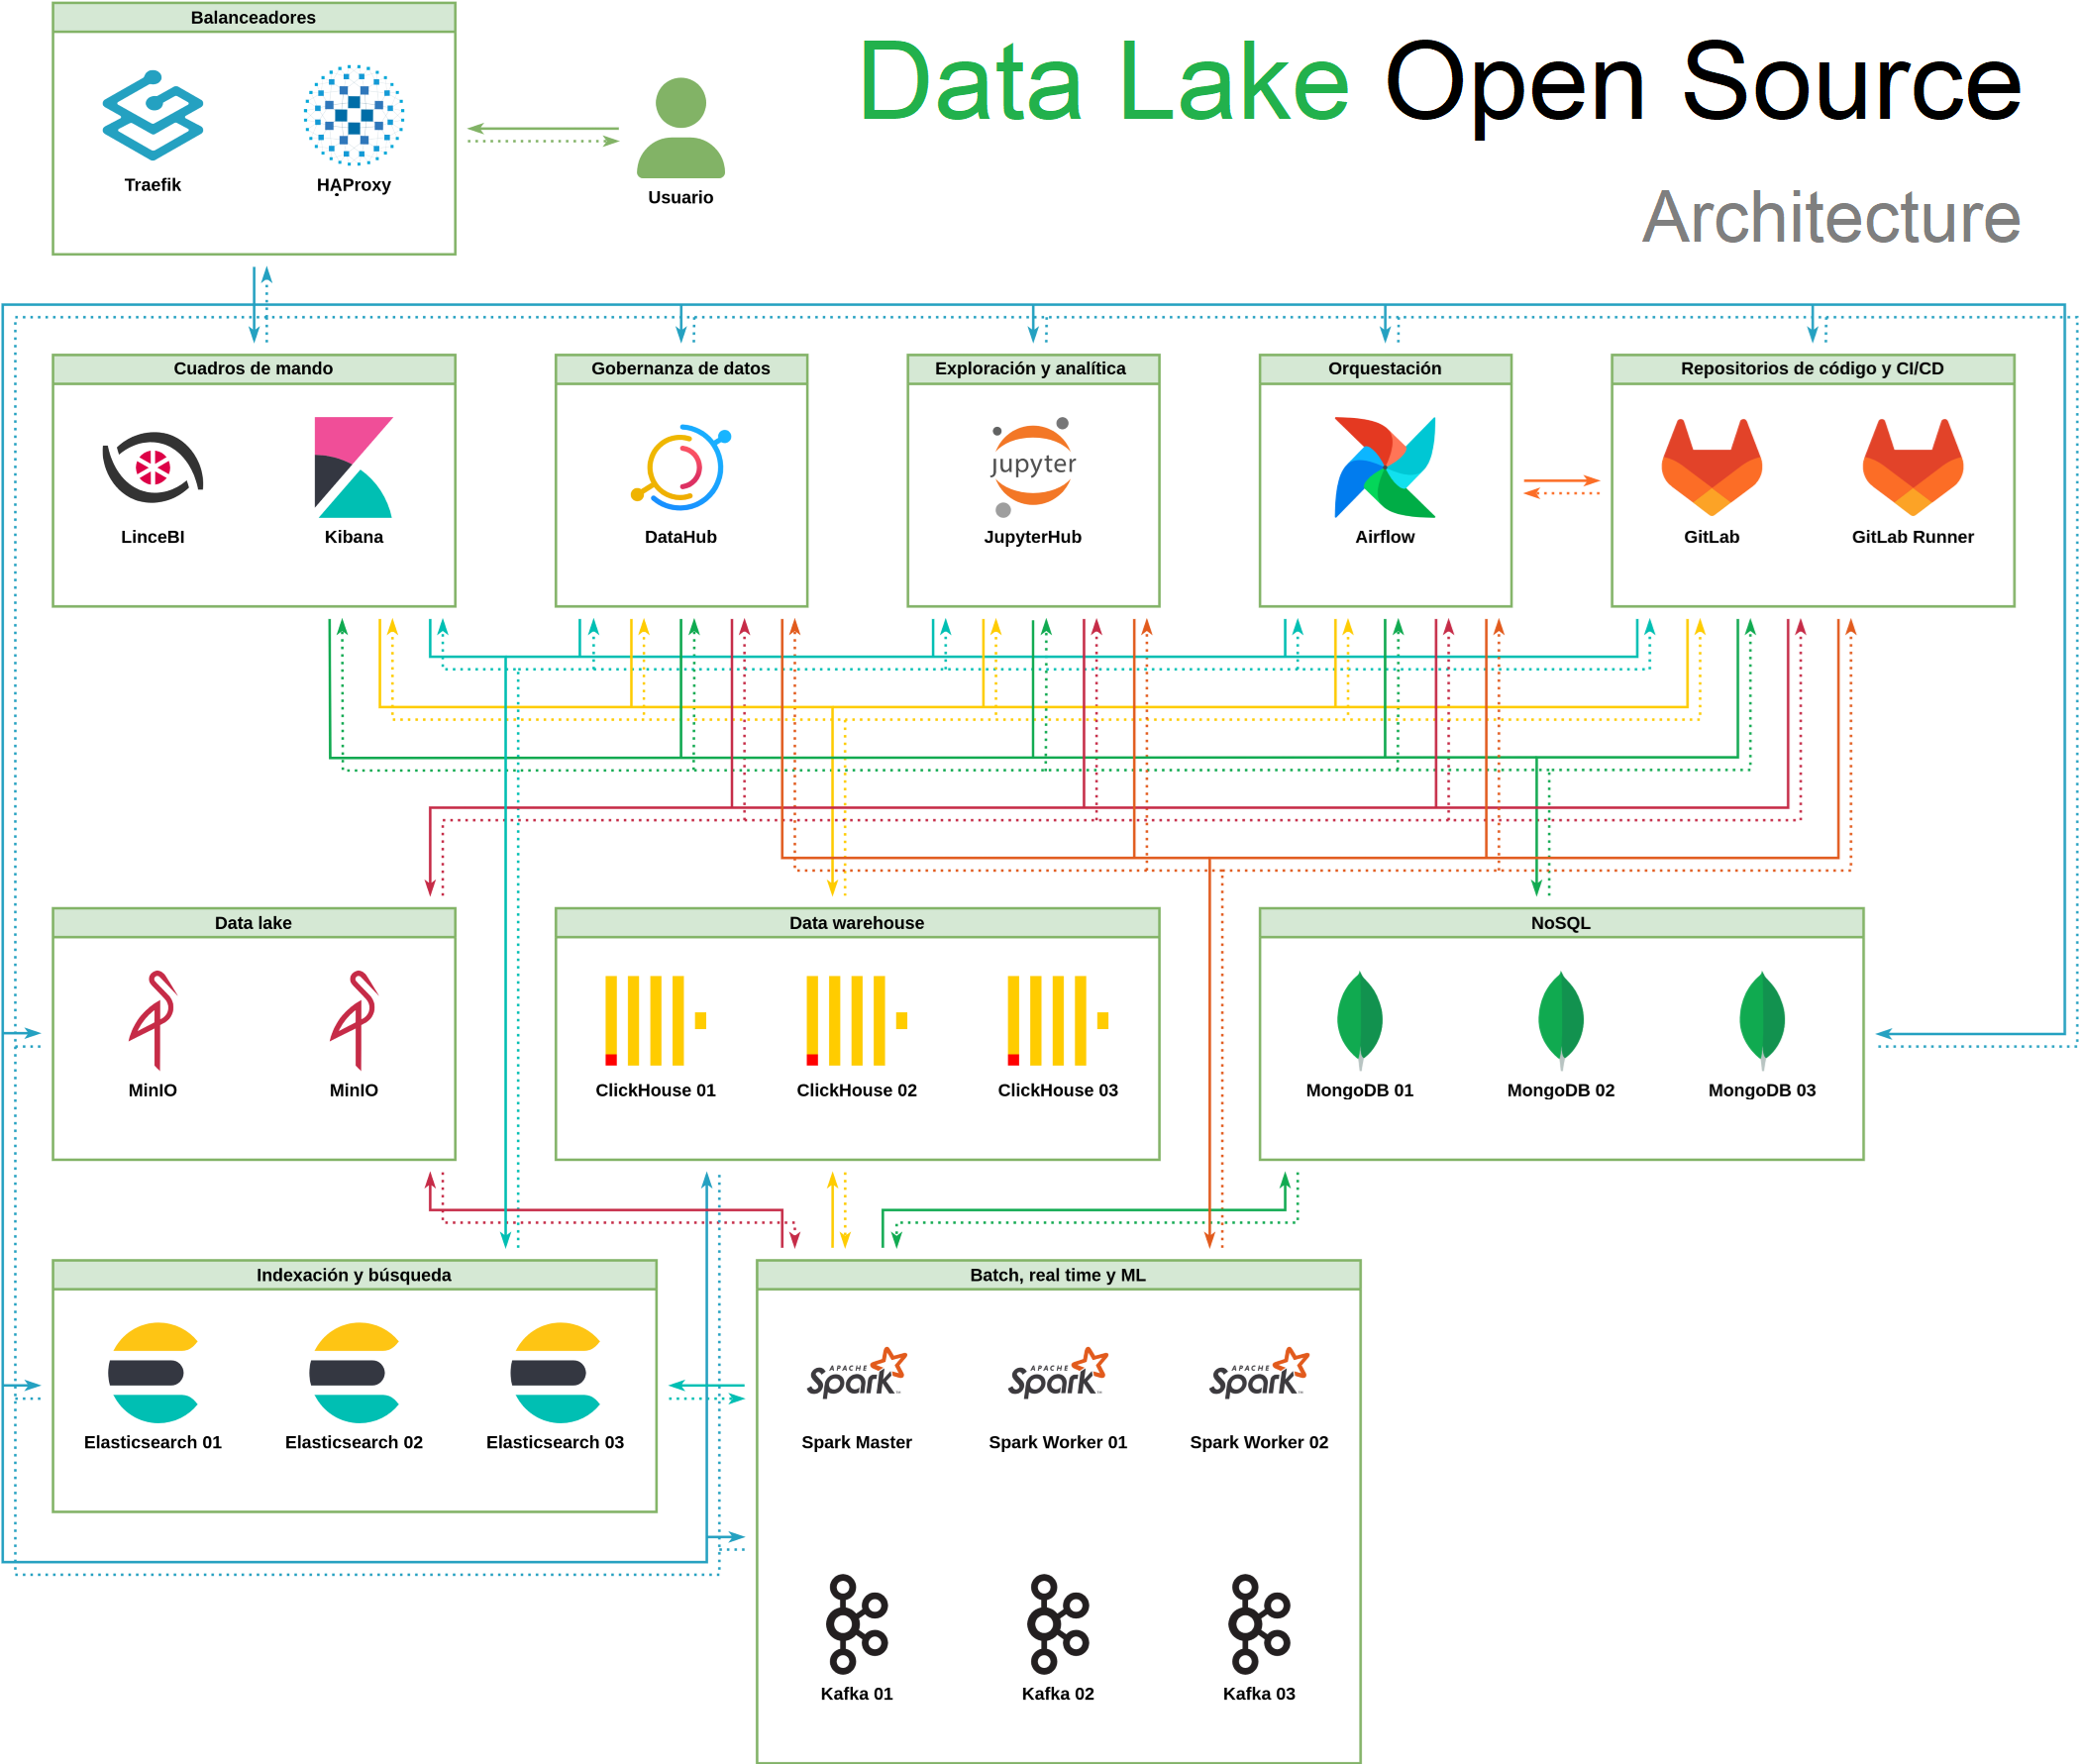 Arquitectura 'Data Lake Open Source'